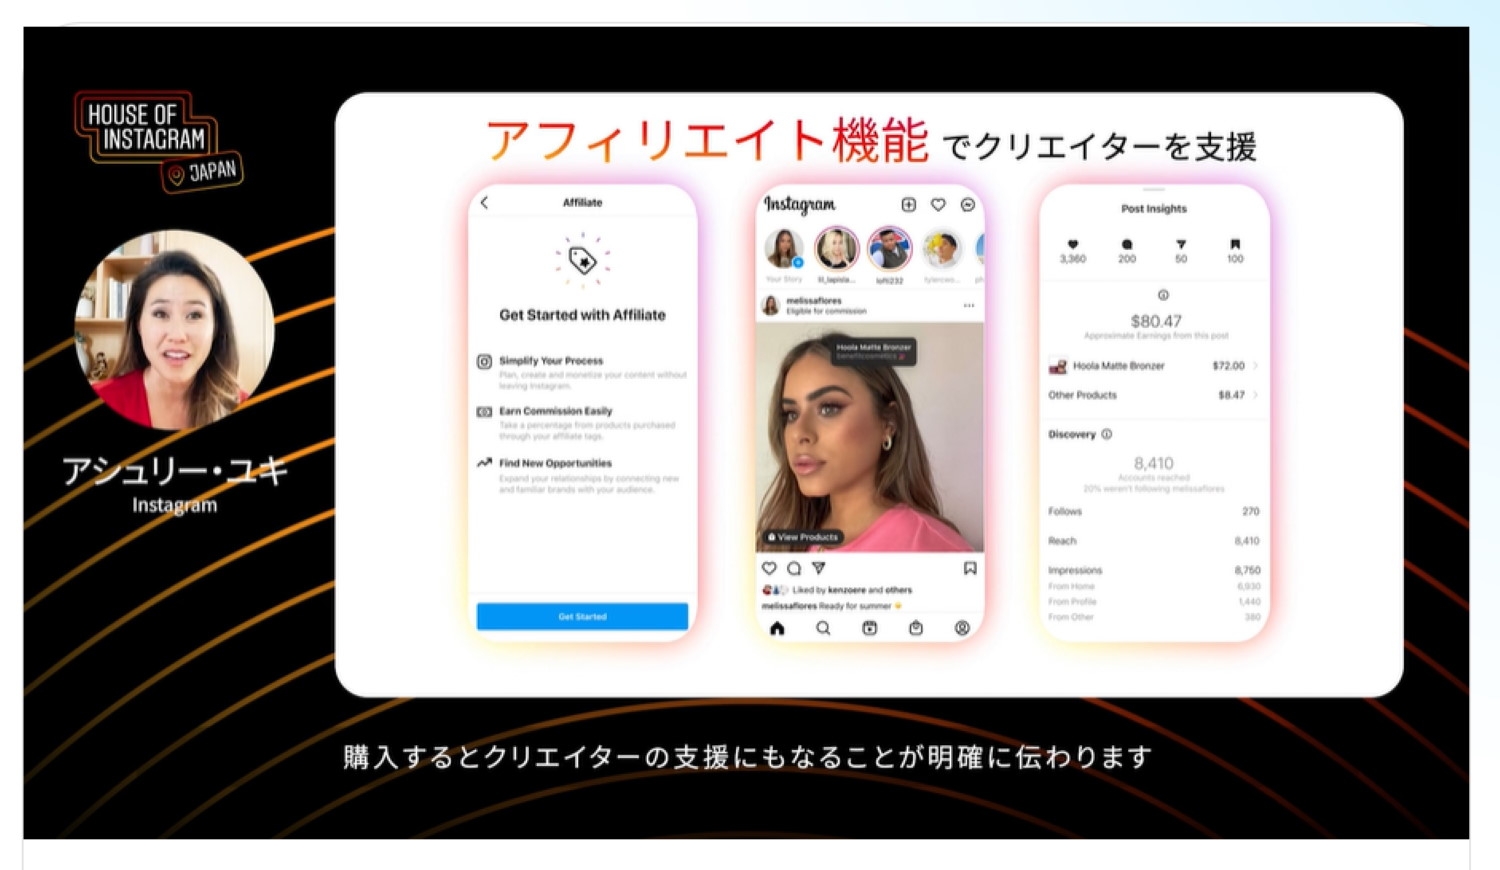 Instagramはアフィリエイト機能を提供する予定 （出所：2021年9月15日に開催された「House of Instagram Japan」の画面を筆者がキャプチャー）